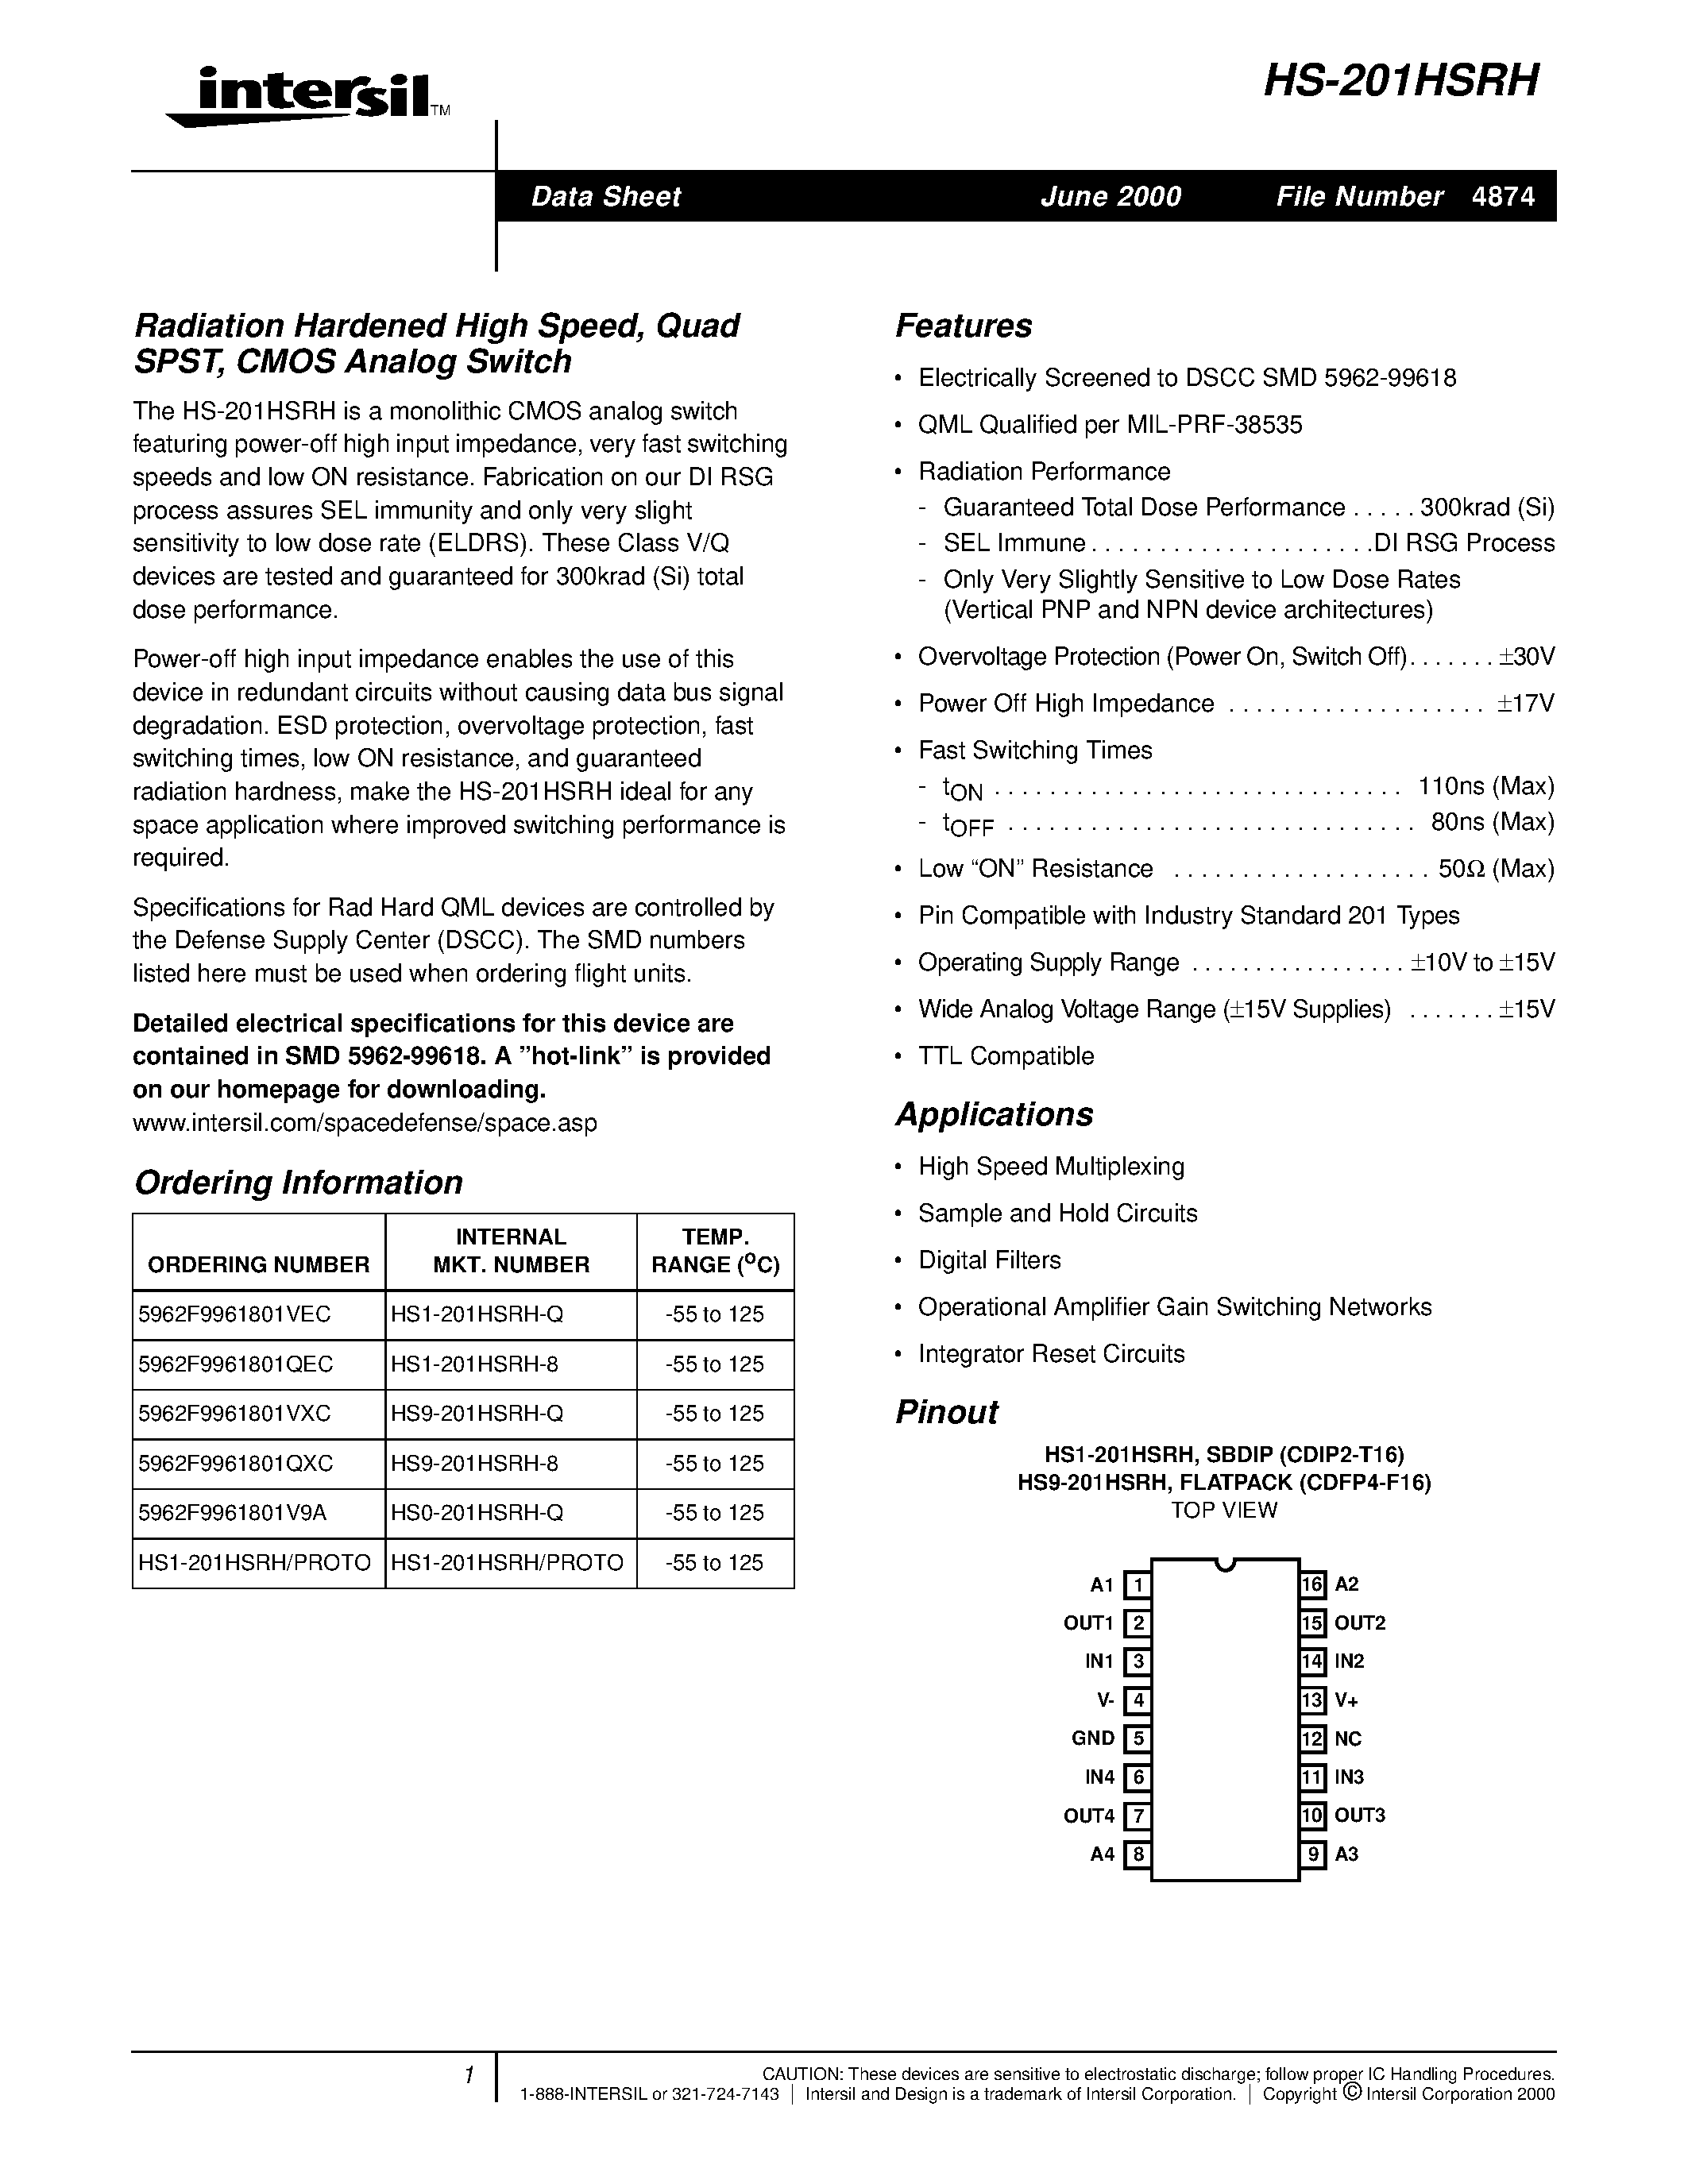 Даташит HS9-201HSRH-Q - Radiation Hardened High Speed/ Quad SPST/ CMOS Analog Switch страница 1